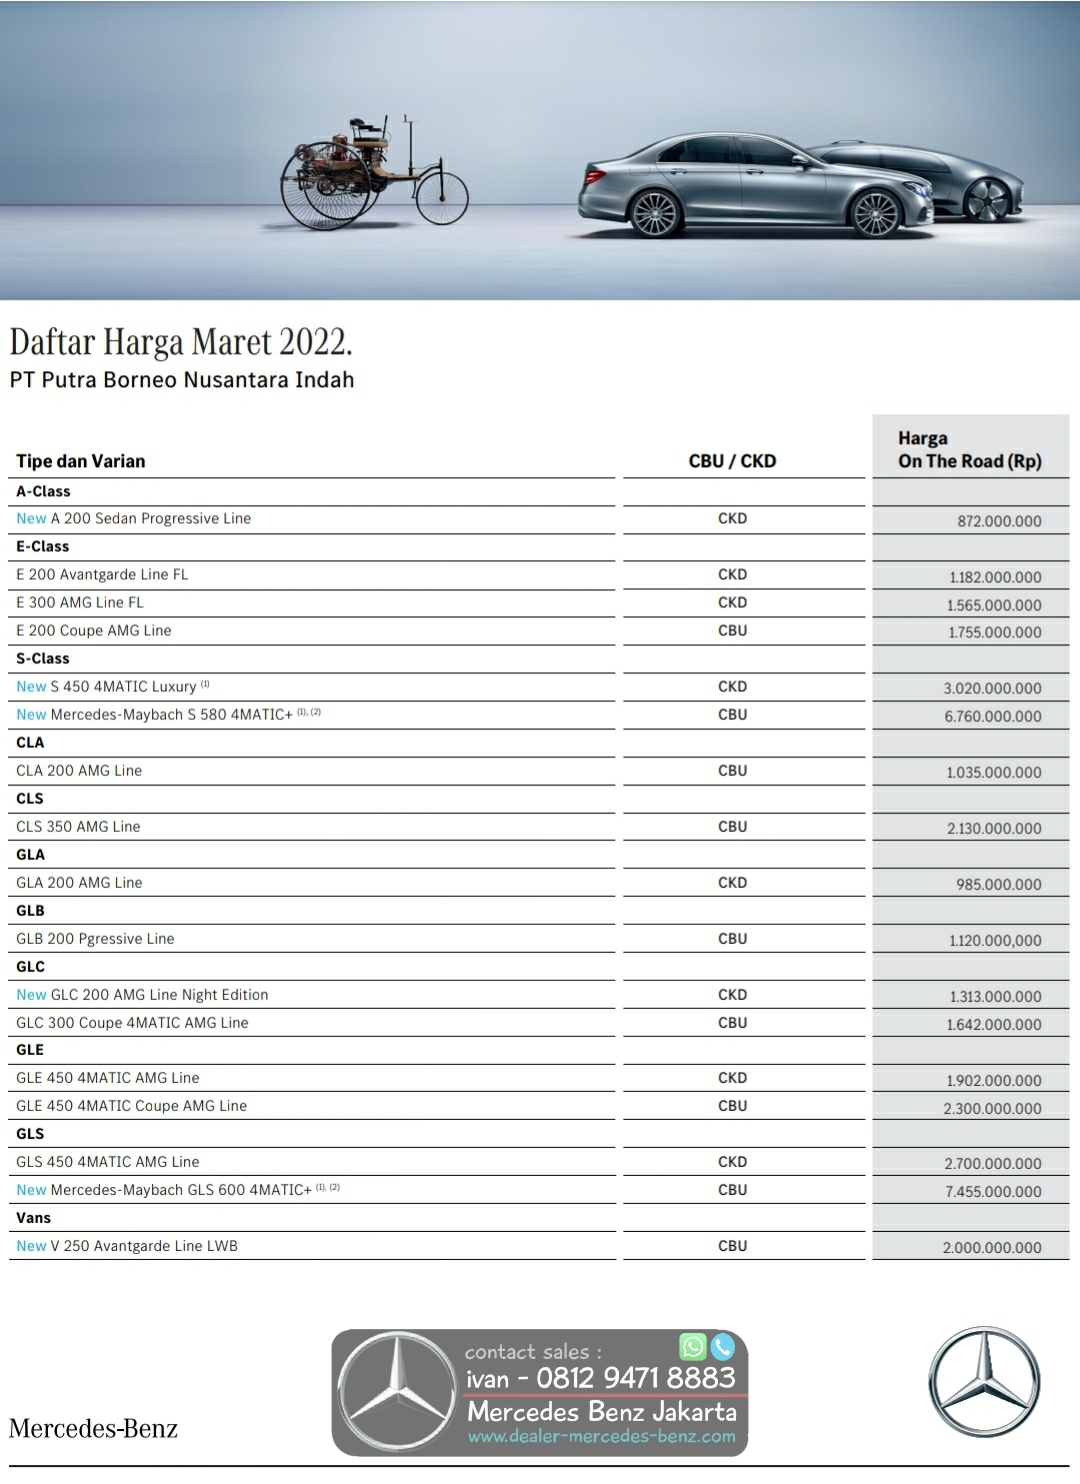 Daftar Harga Price List Mercedes Benz Jakarta - Indonesia 2022